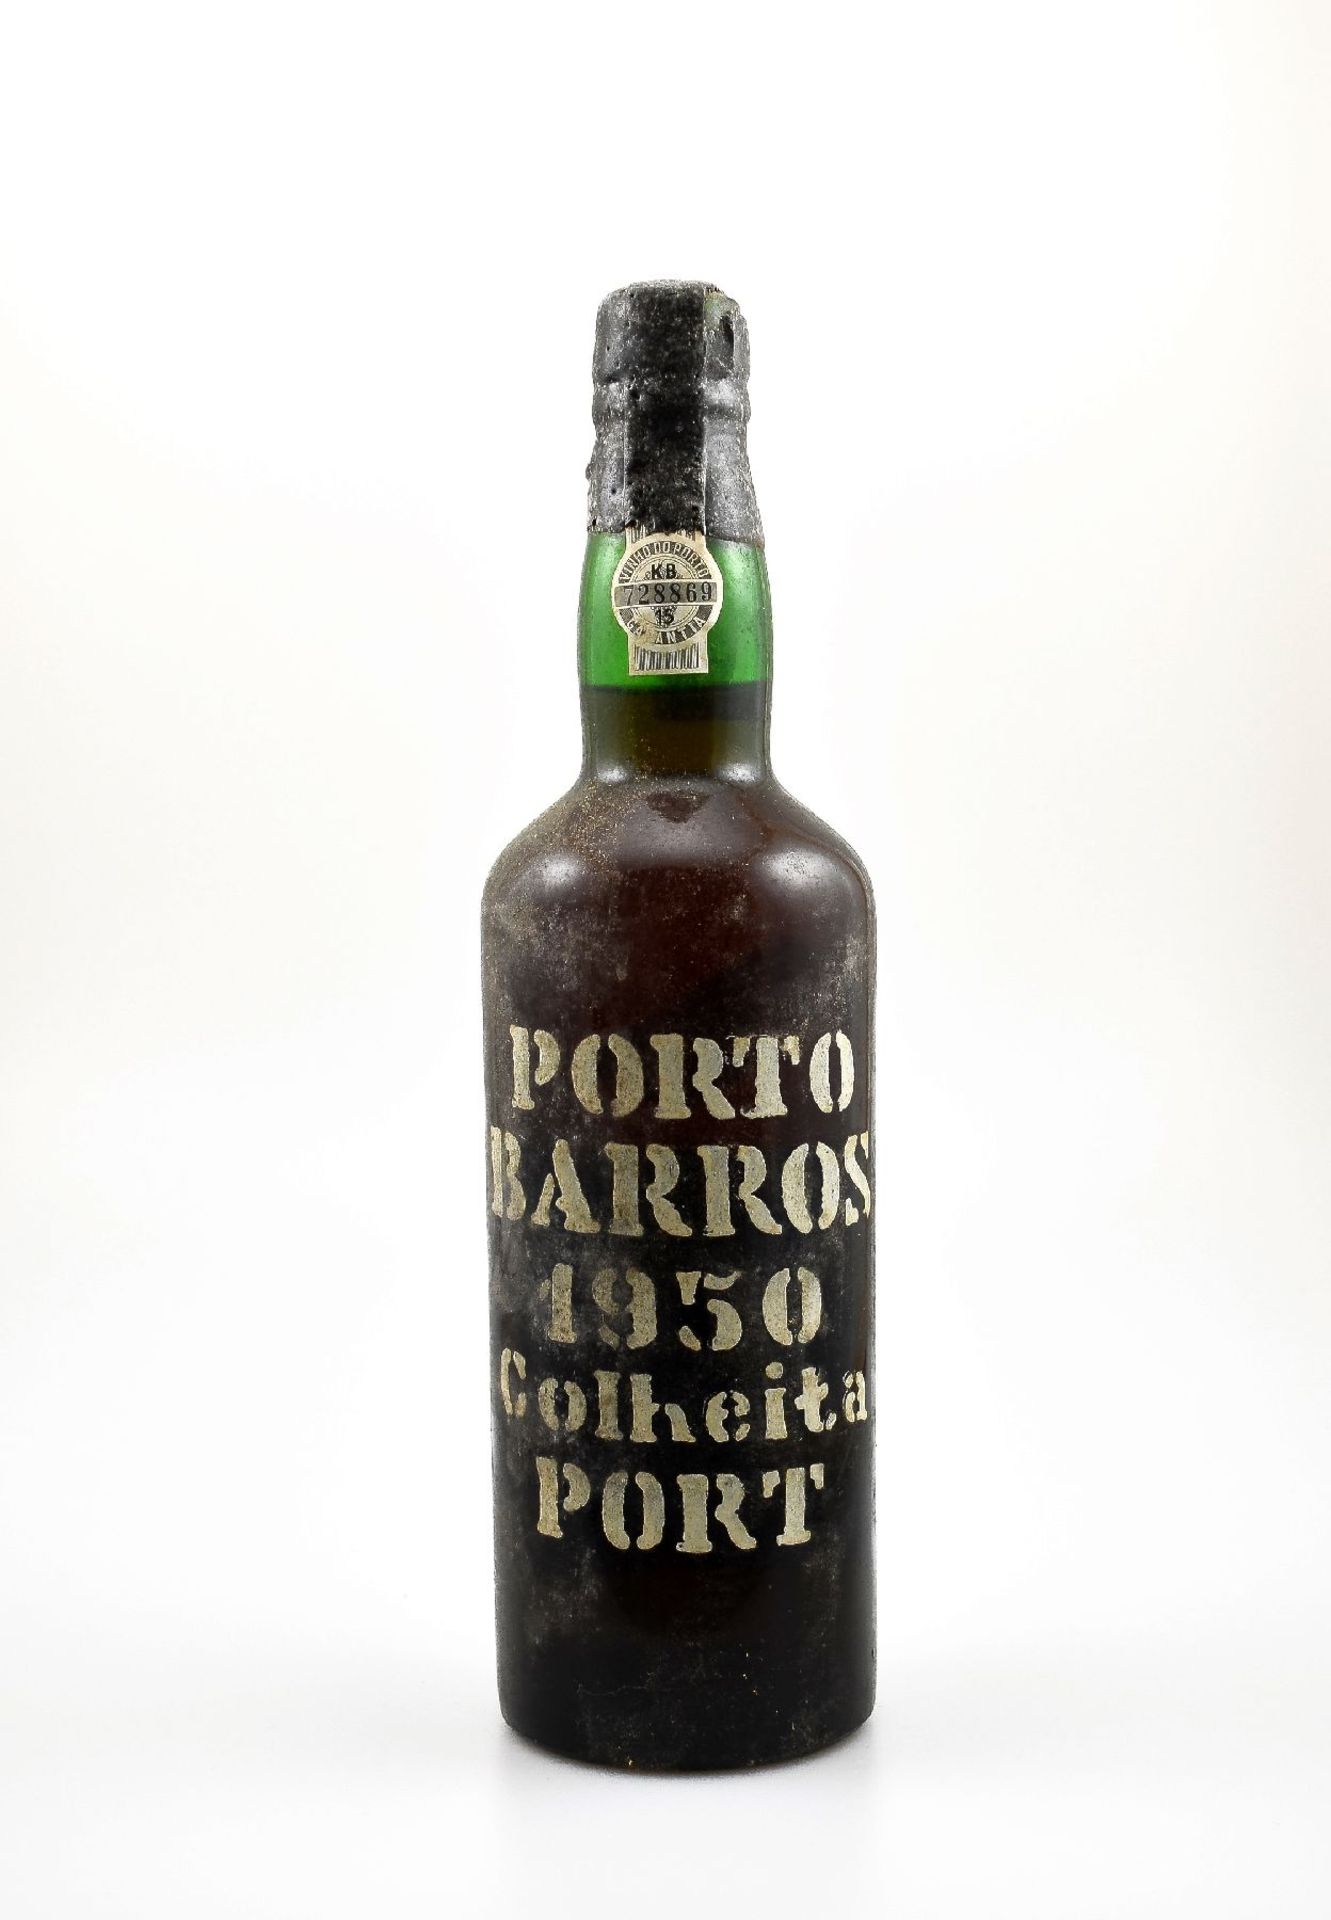 1 bottle 1950 Port Barros, Colheita Port, ca. 75 cl, 20 % Vol., filling level: approx into neck, not